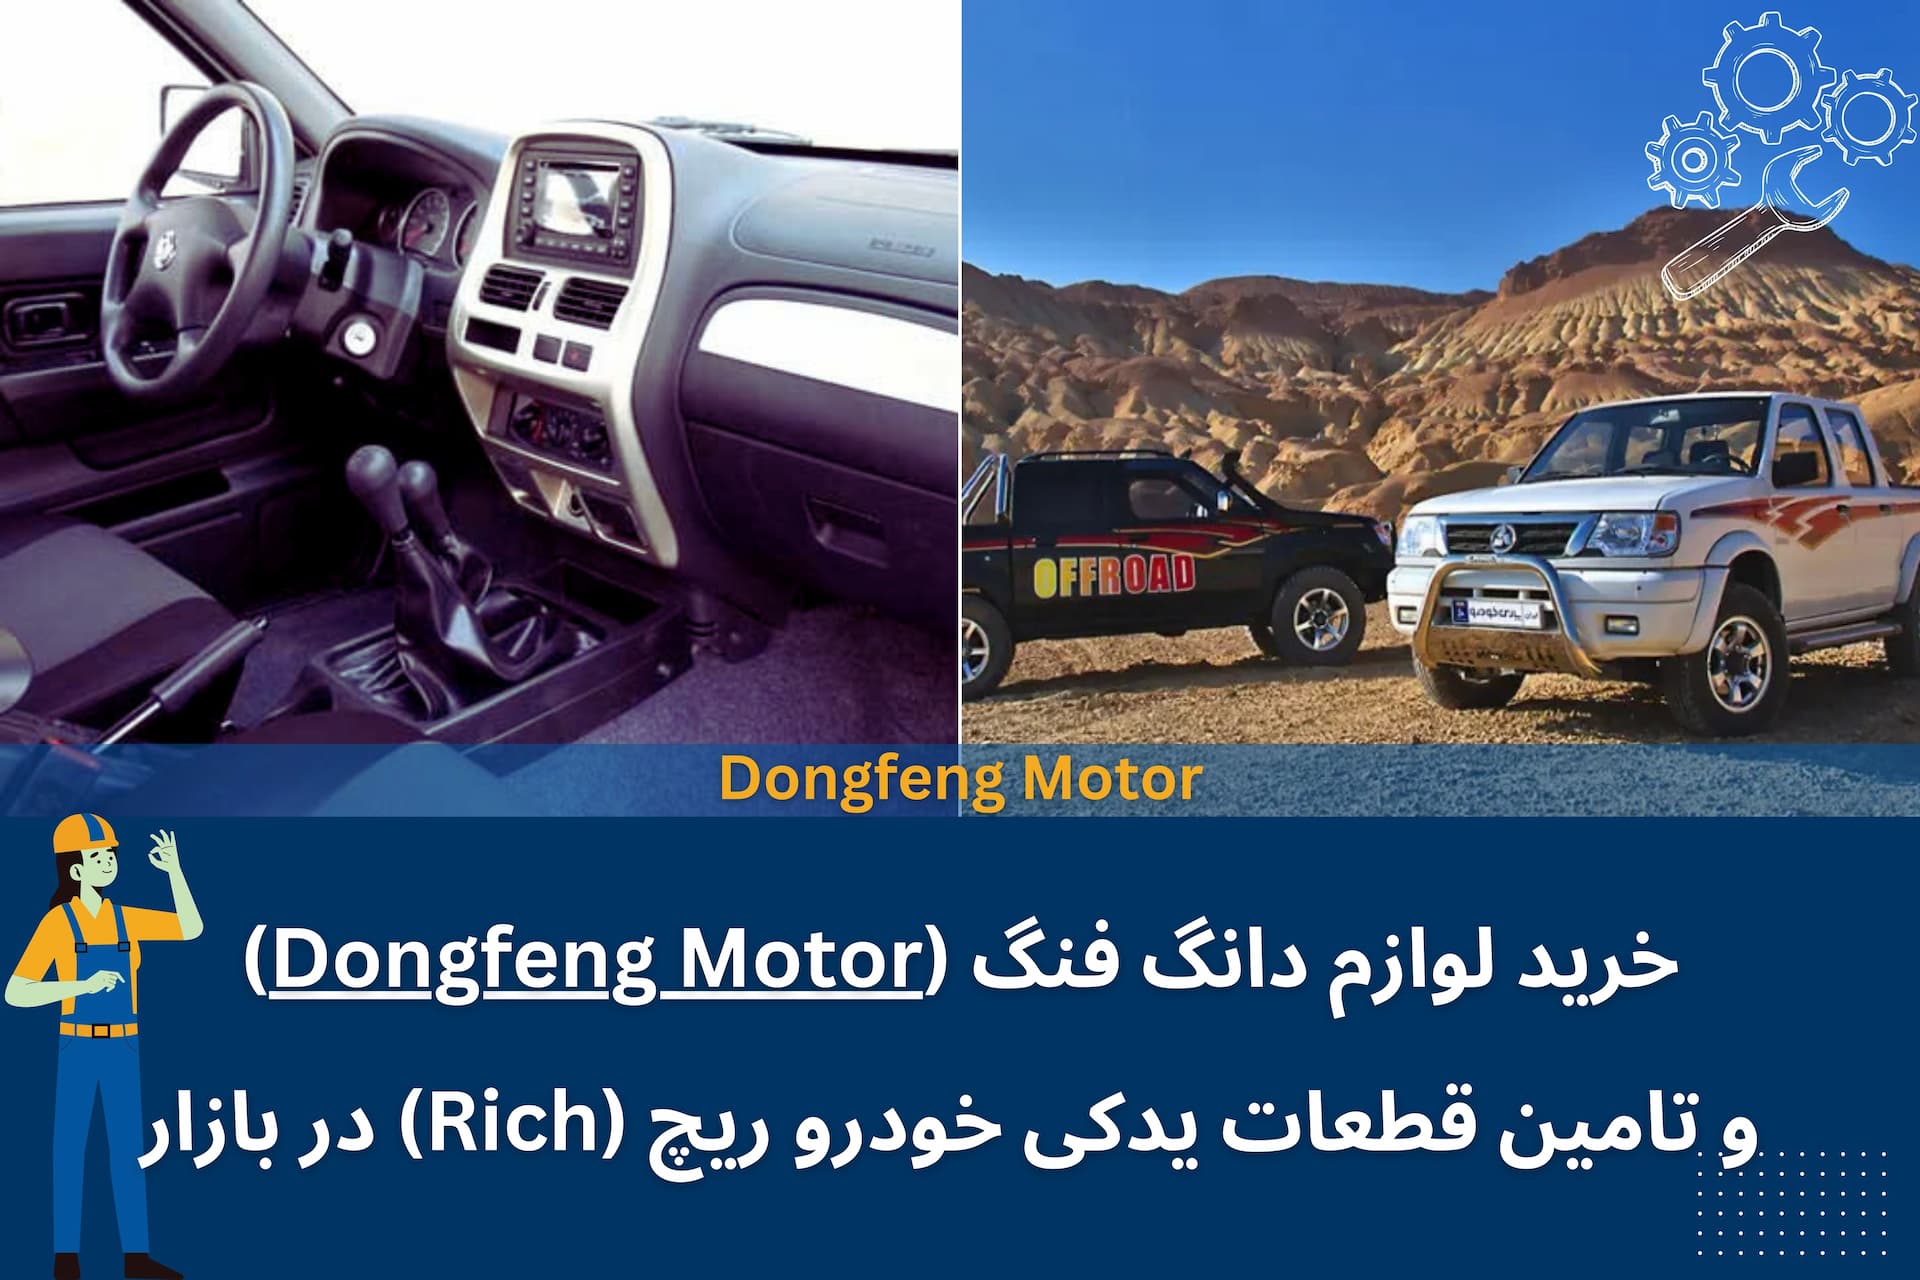 خرید لوازم دانگ فنگ (Dongfeng Motor)